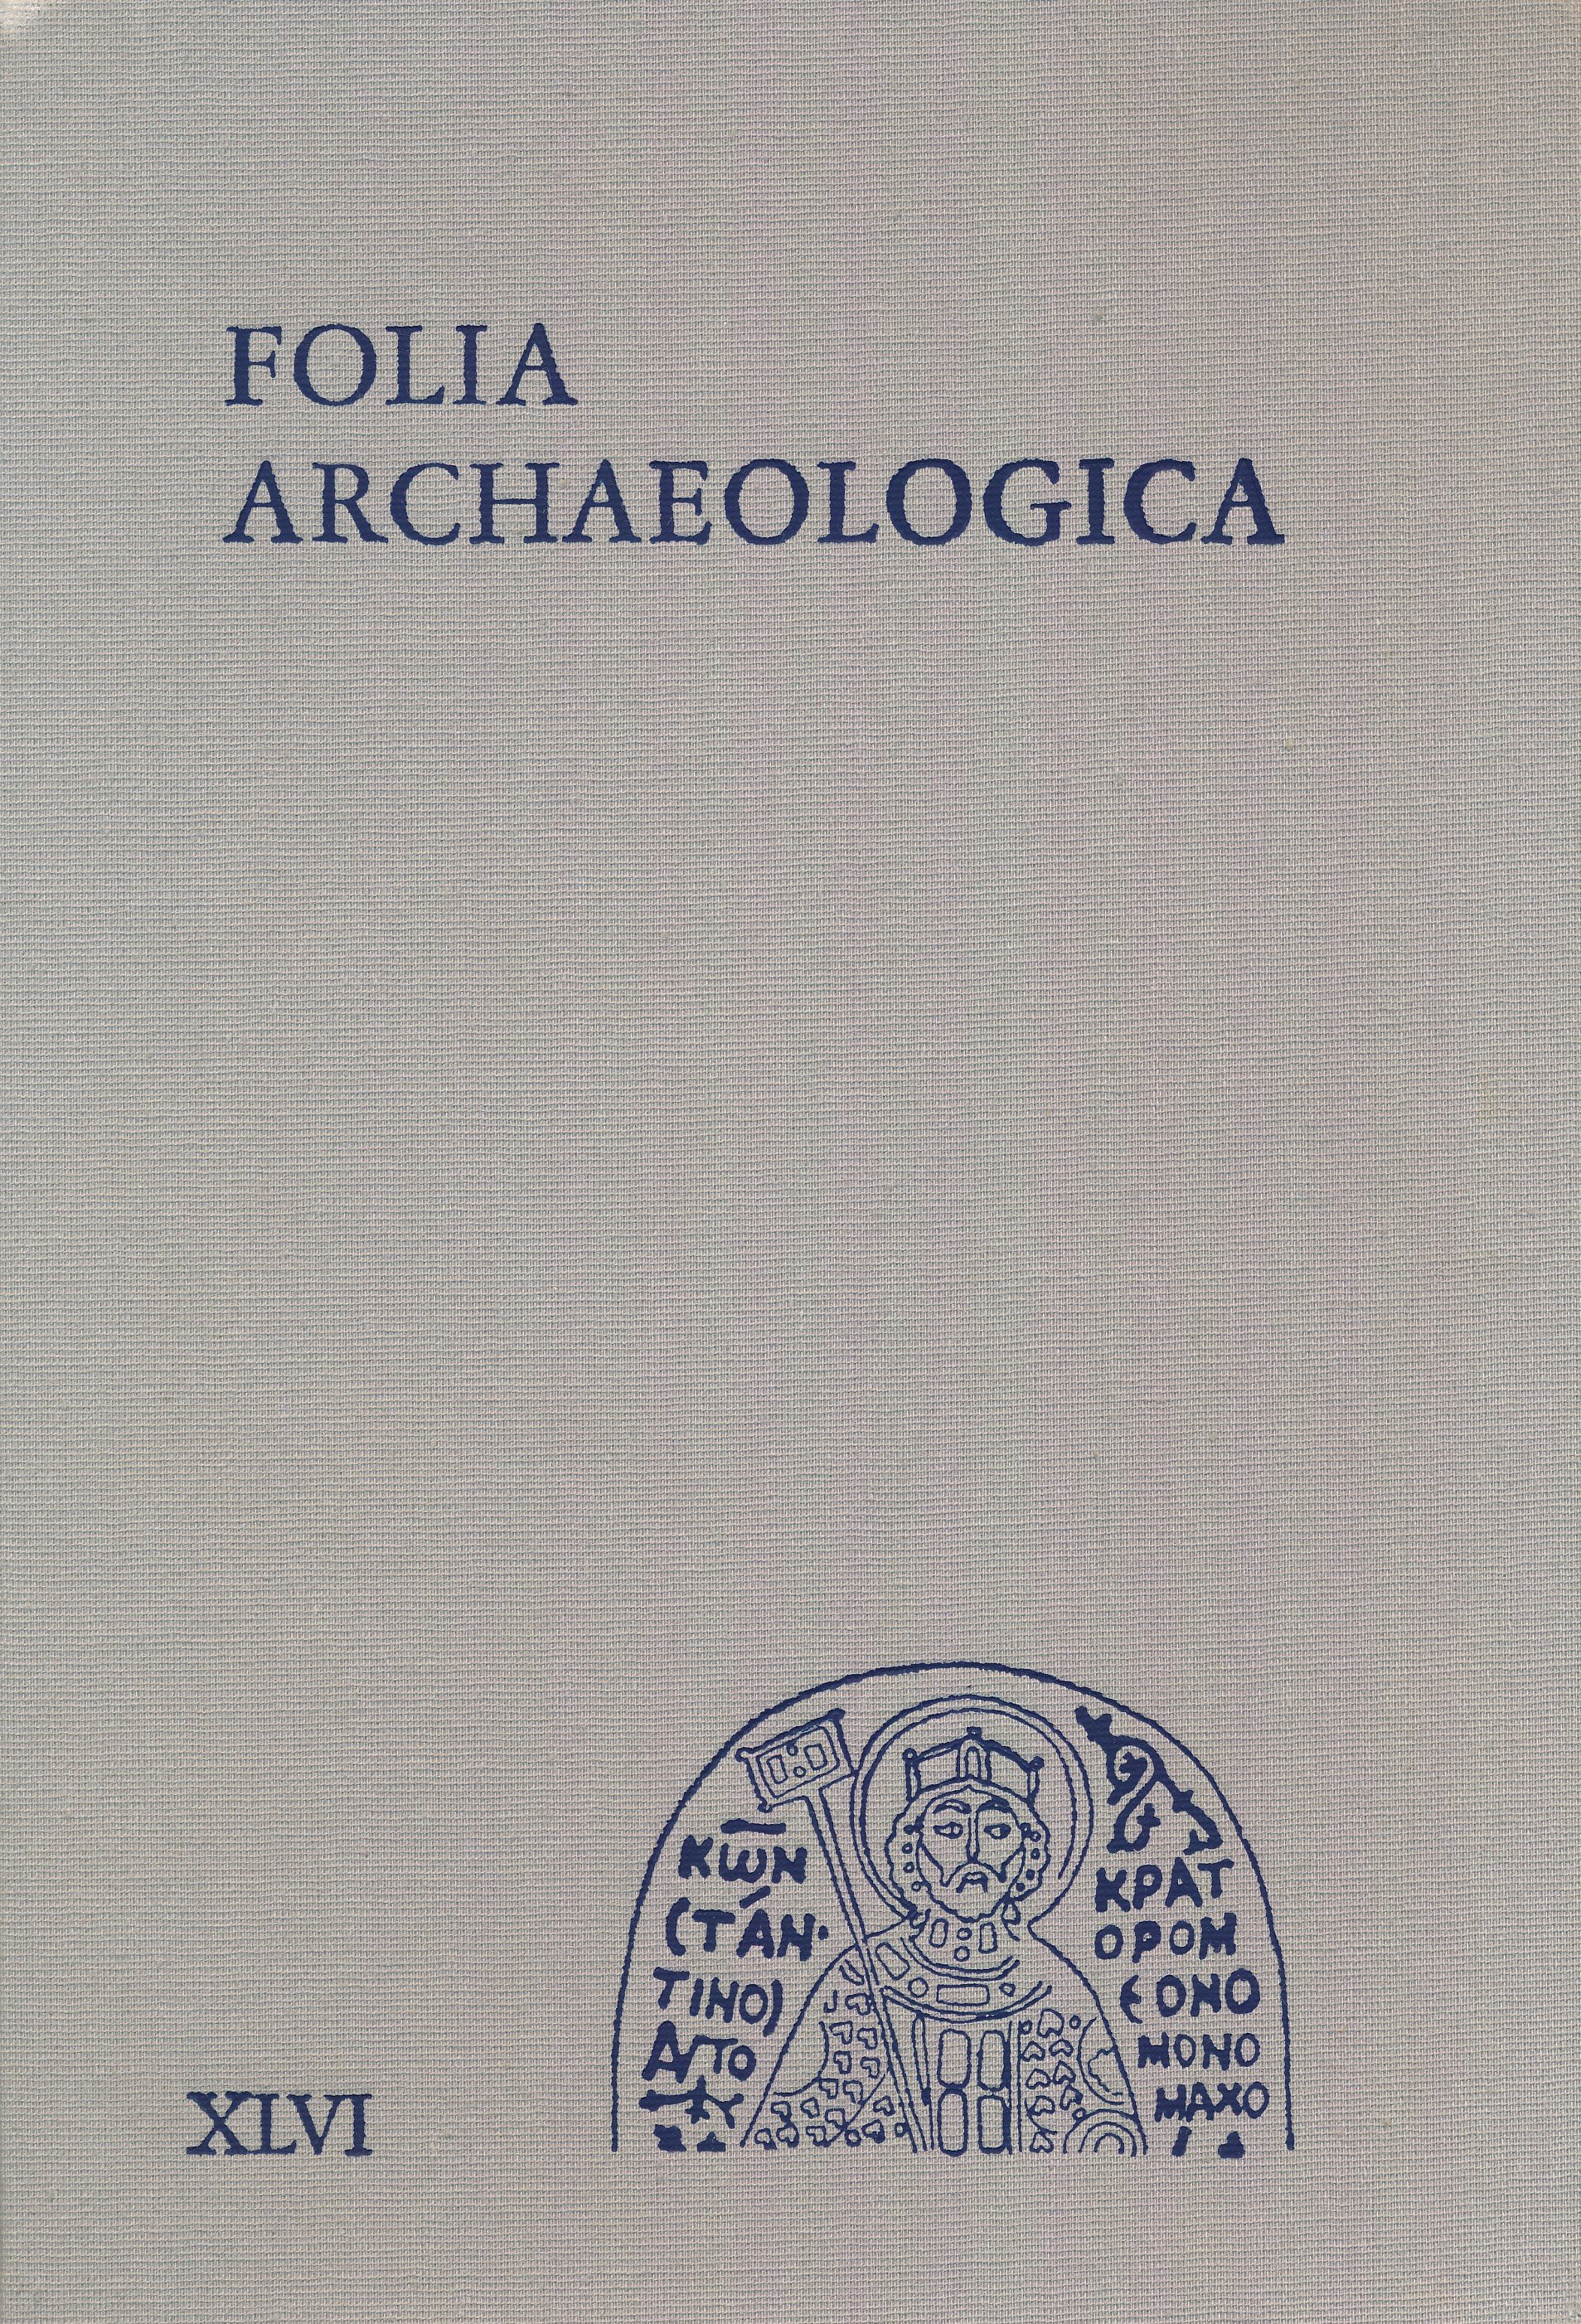 Folia archaeologica XLVI. (Erkel Ferenc Területi Múzeum, Gyula CC BY-NC-SA)